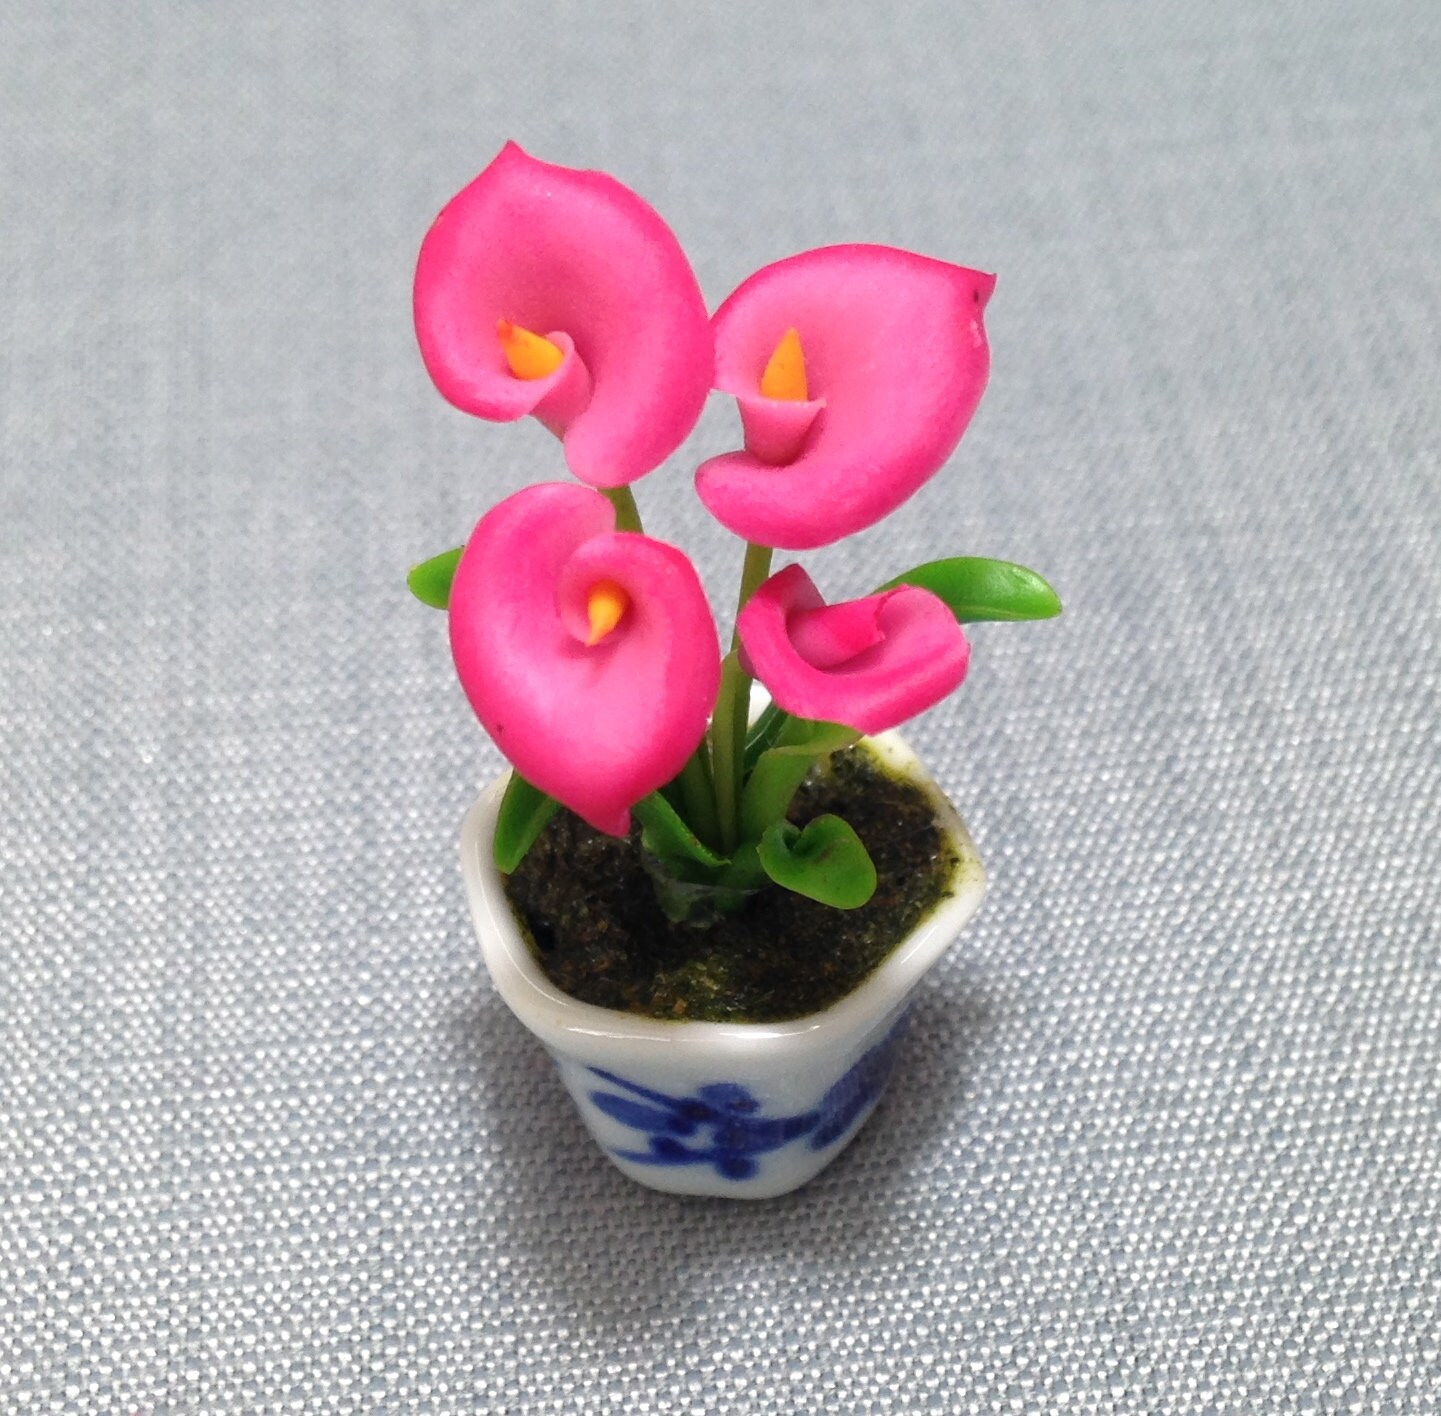 Miniature Dollhouse FAIRY GARDEN Accessories ~ White Lilies Flowers in Blue Pot 